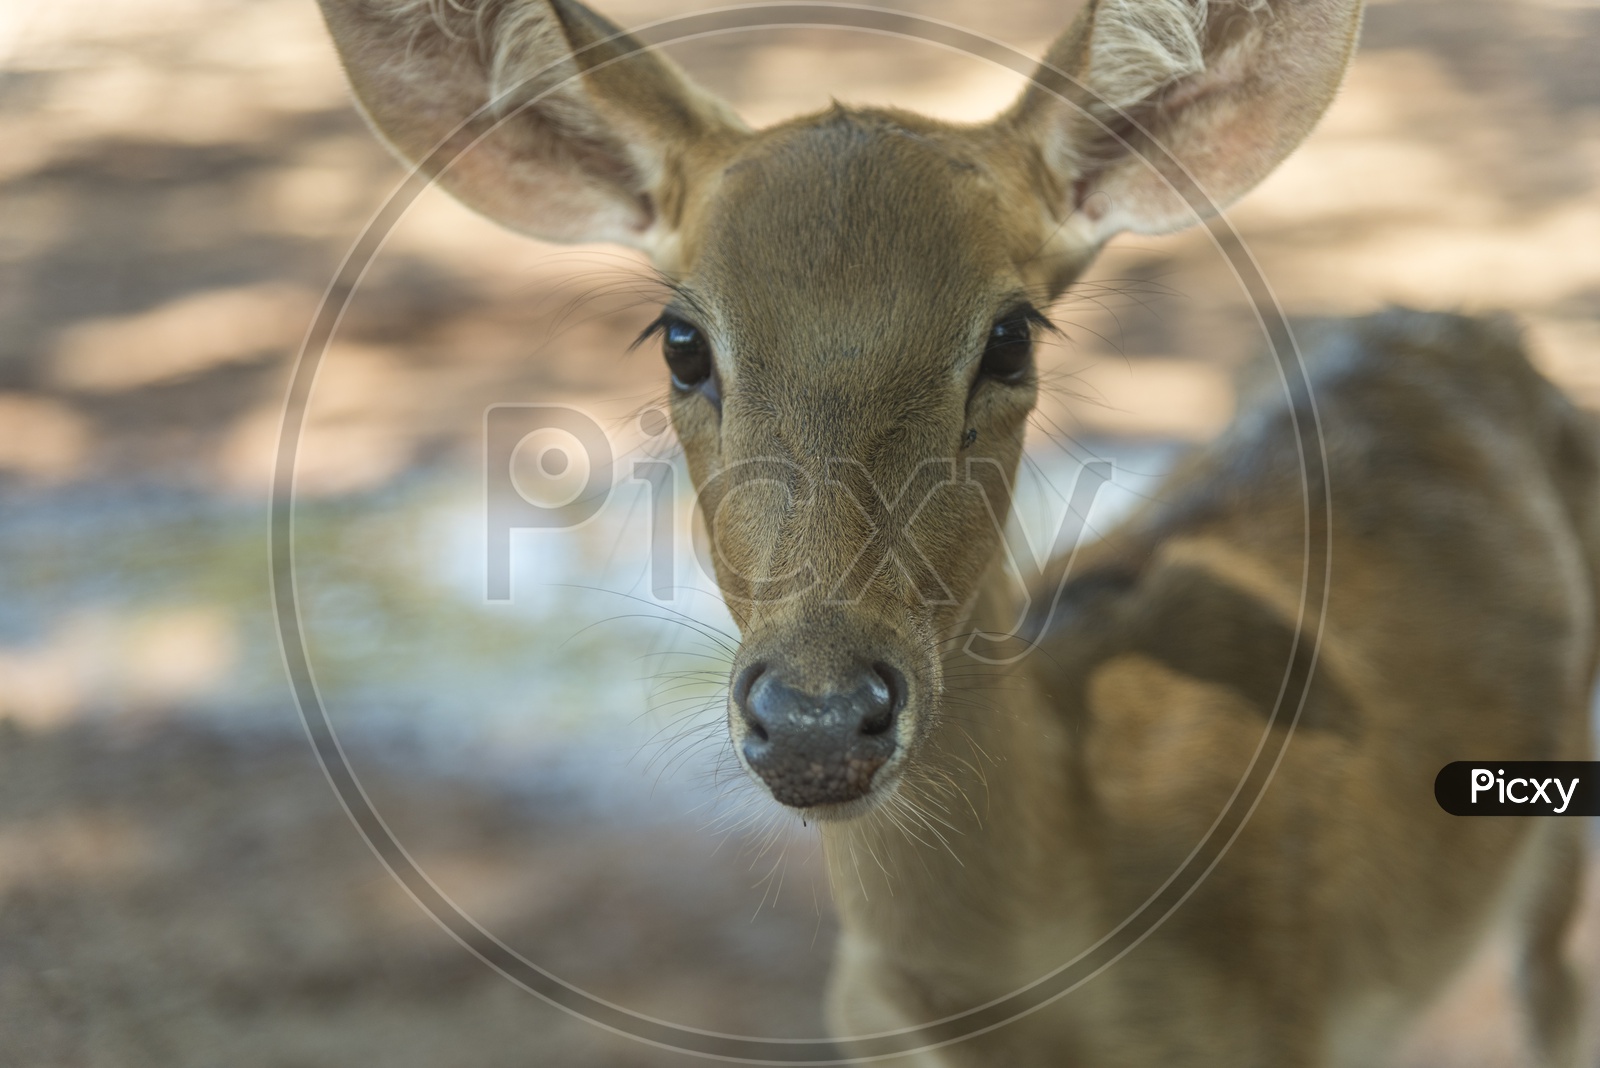 Young Barking Deer In Kahao yai National Park